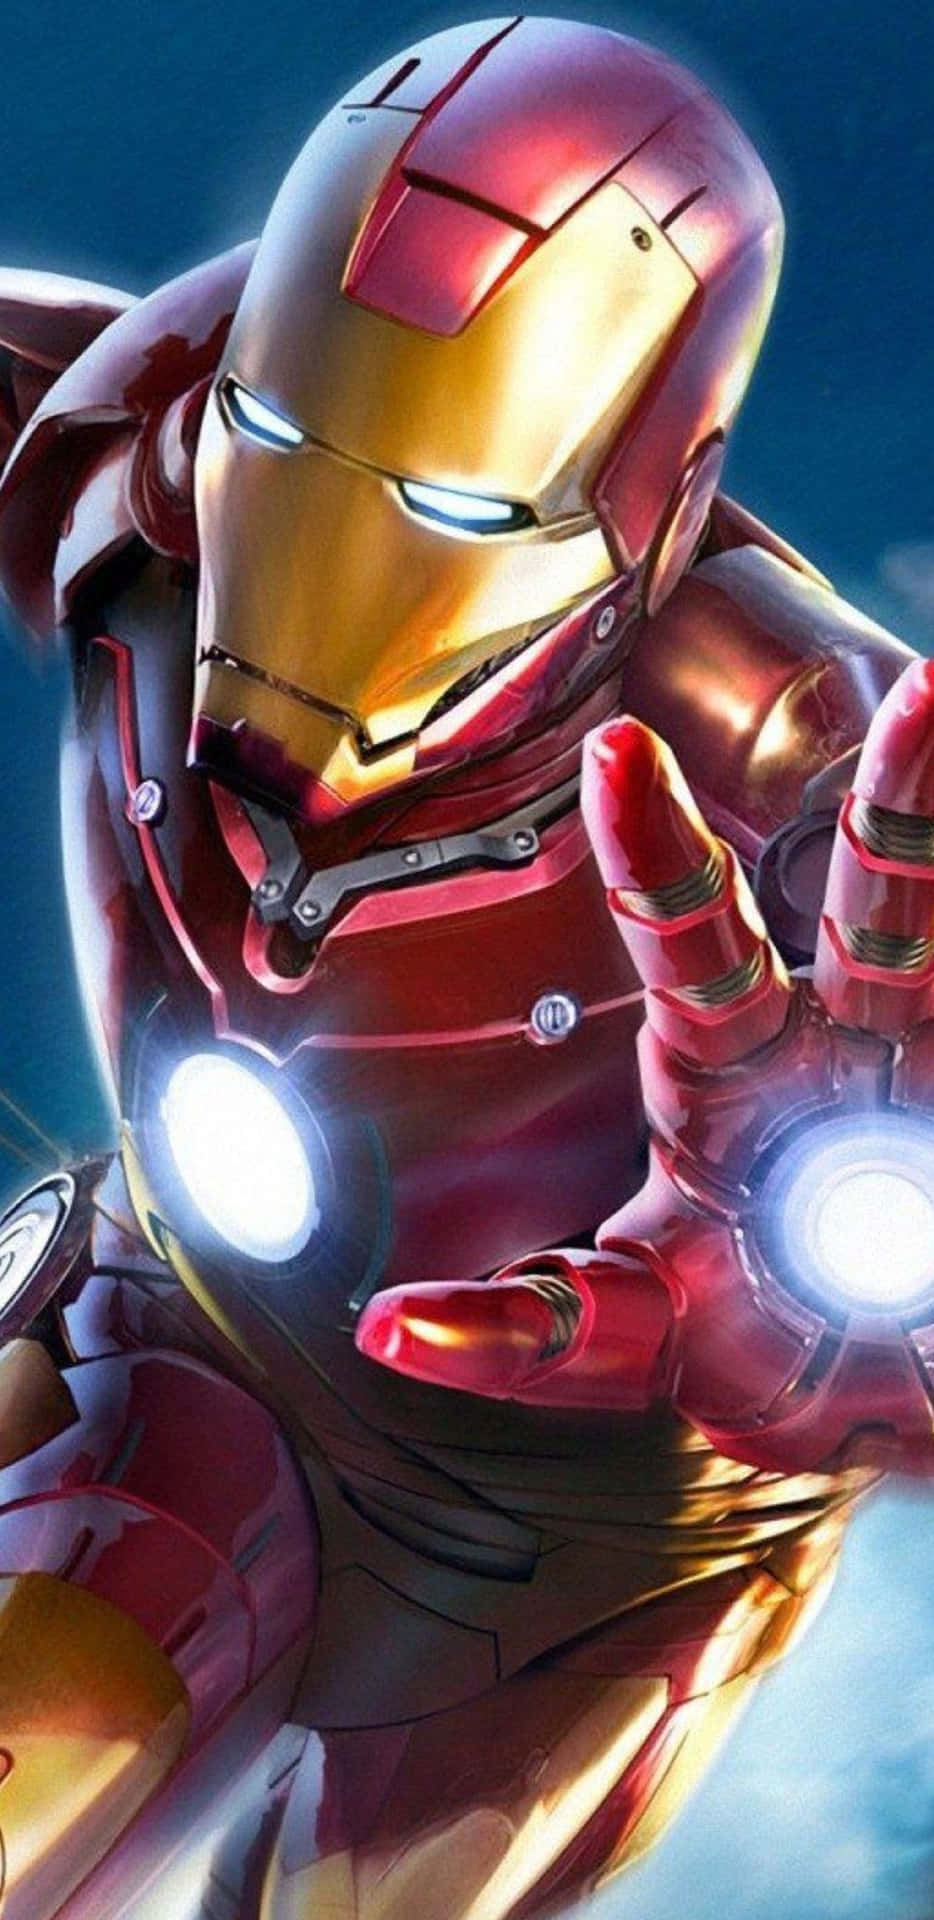 Fondode Pantalla Del Pixel 3xl Con La Imagen Del Ataque Característico De Iron Man.